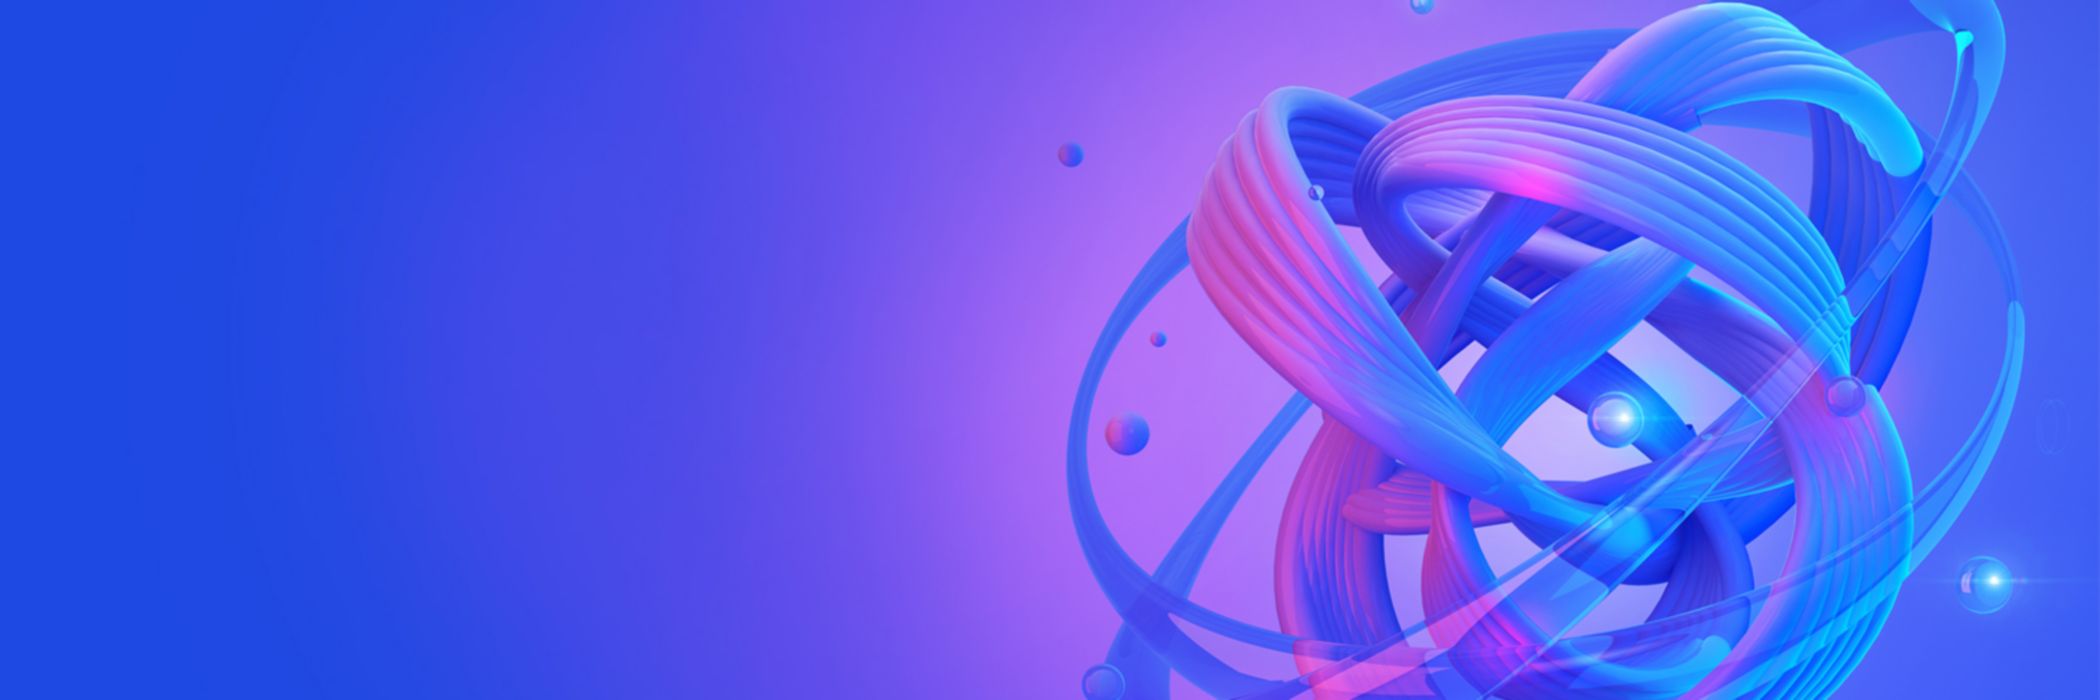 Blue purple circular vortex abstract